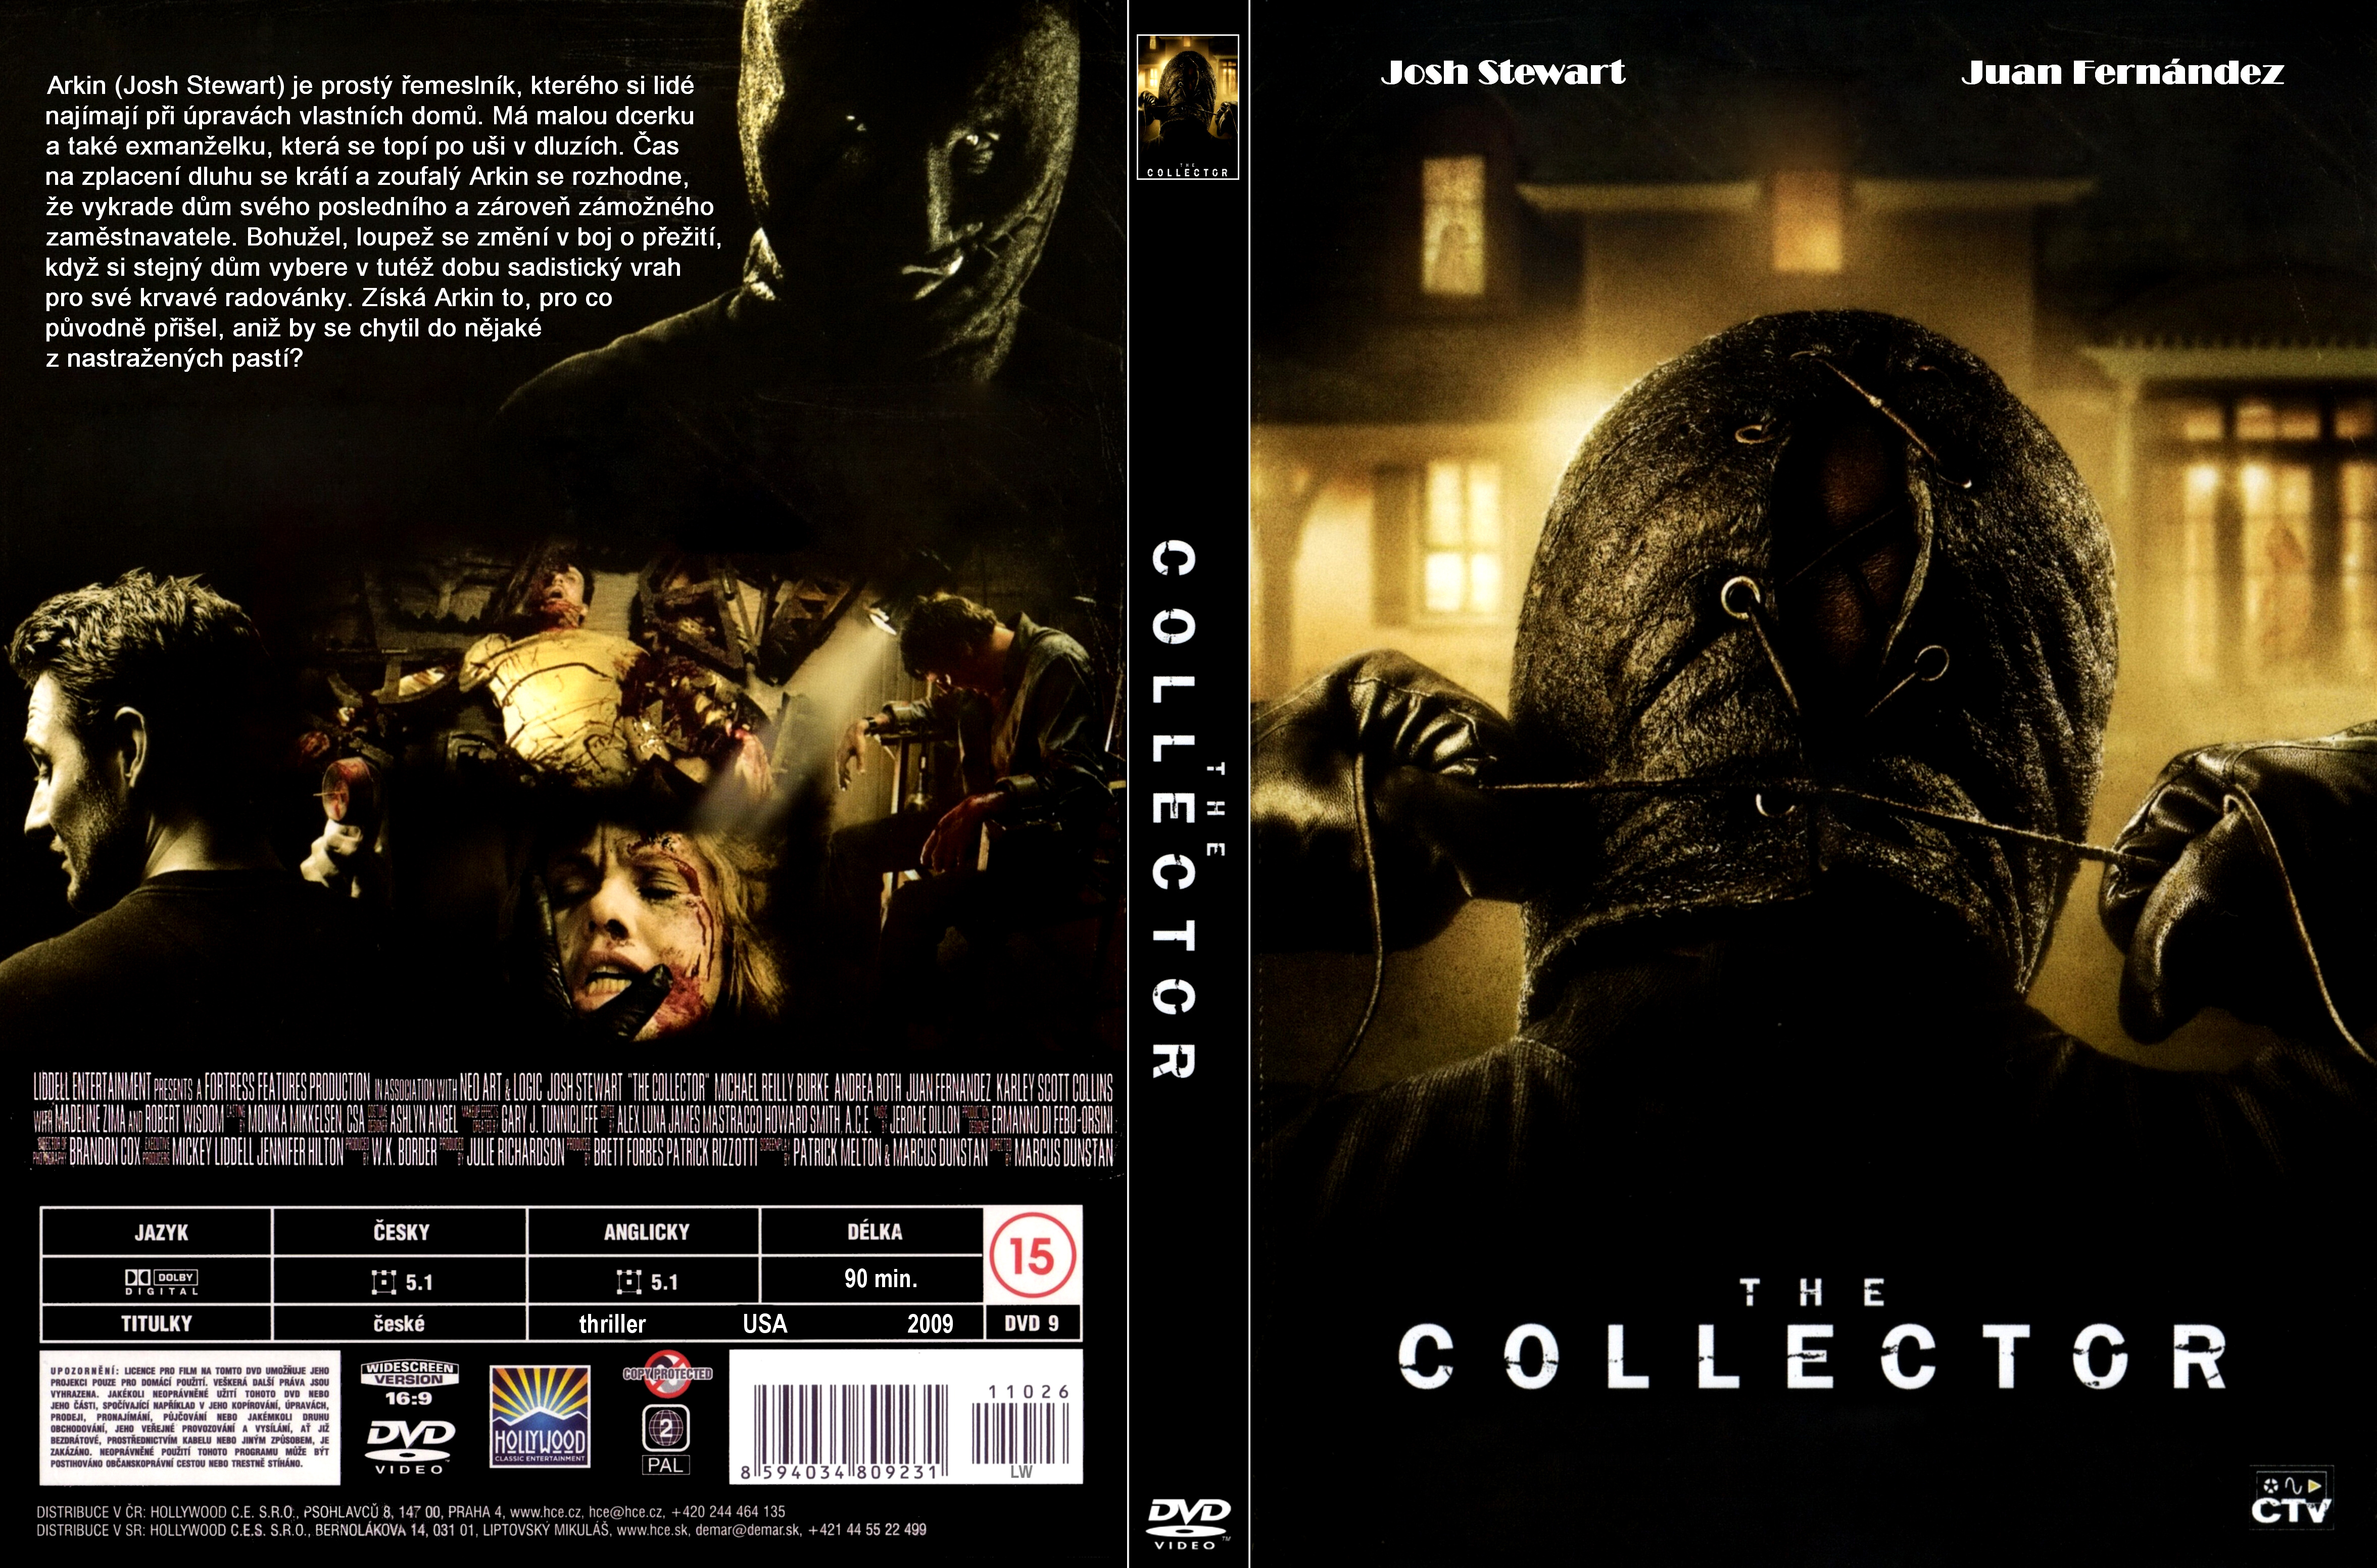 Collection 2009. Коллекционер the Collector, 2009. DVD Cover the Collector. Коллекционер обложка.